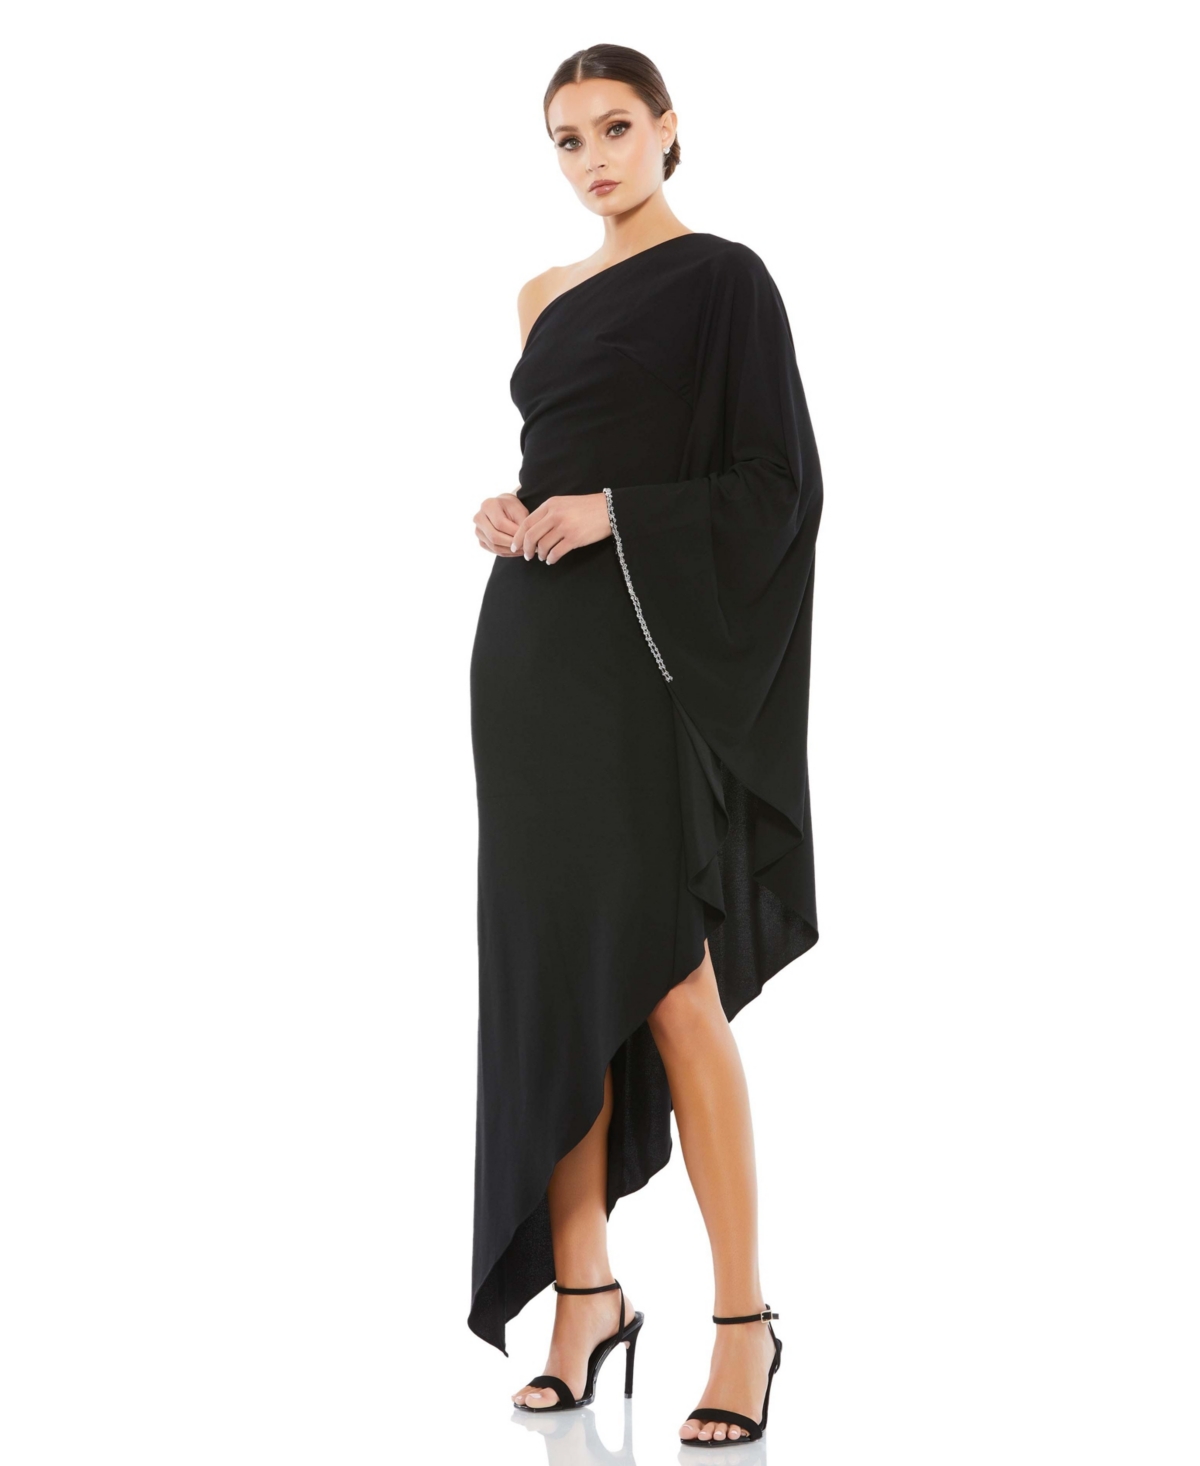 Women's One Shoulder Asymmetrical Hem Flowy Dress - Black